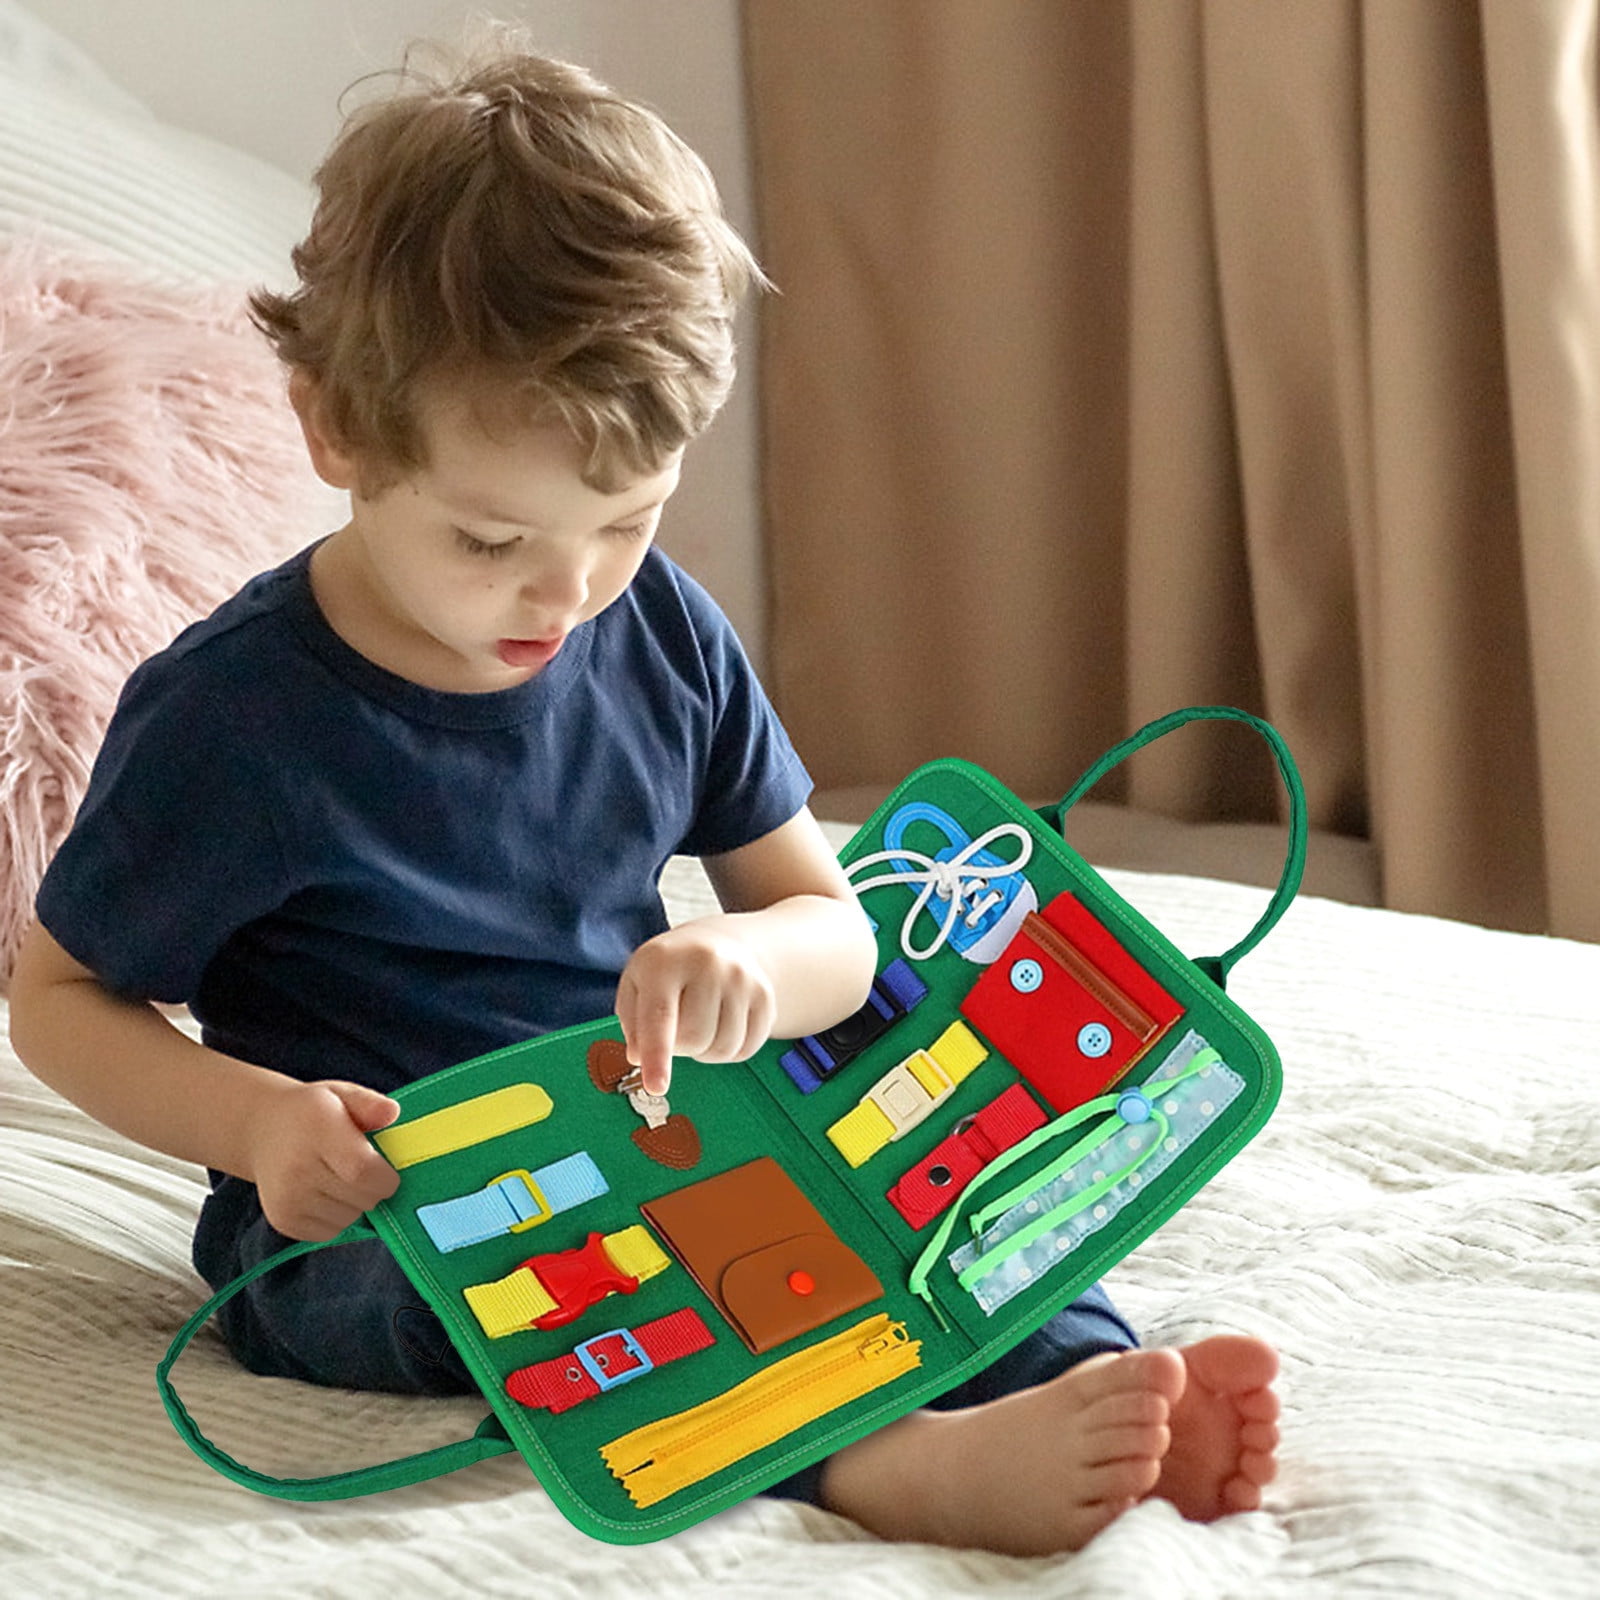 Music Box Motor Skills Montessori Educational Child Music Toy Busy Board Kit 